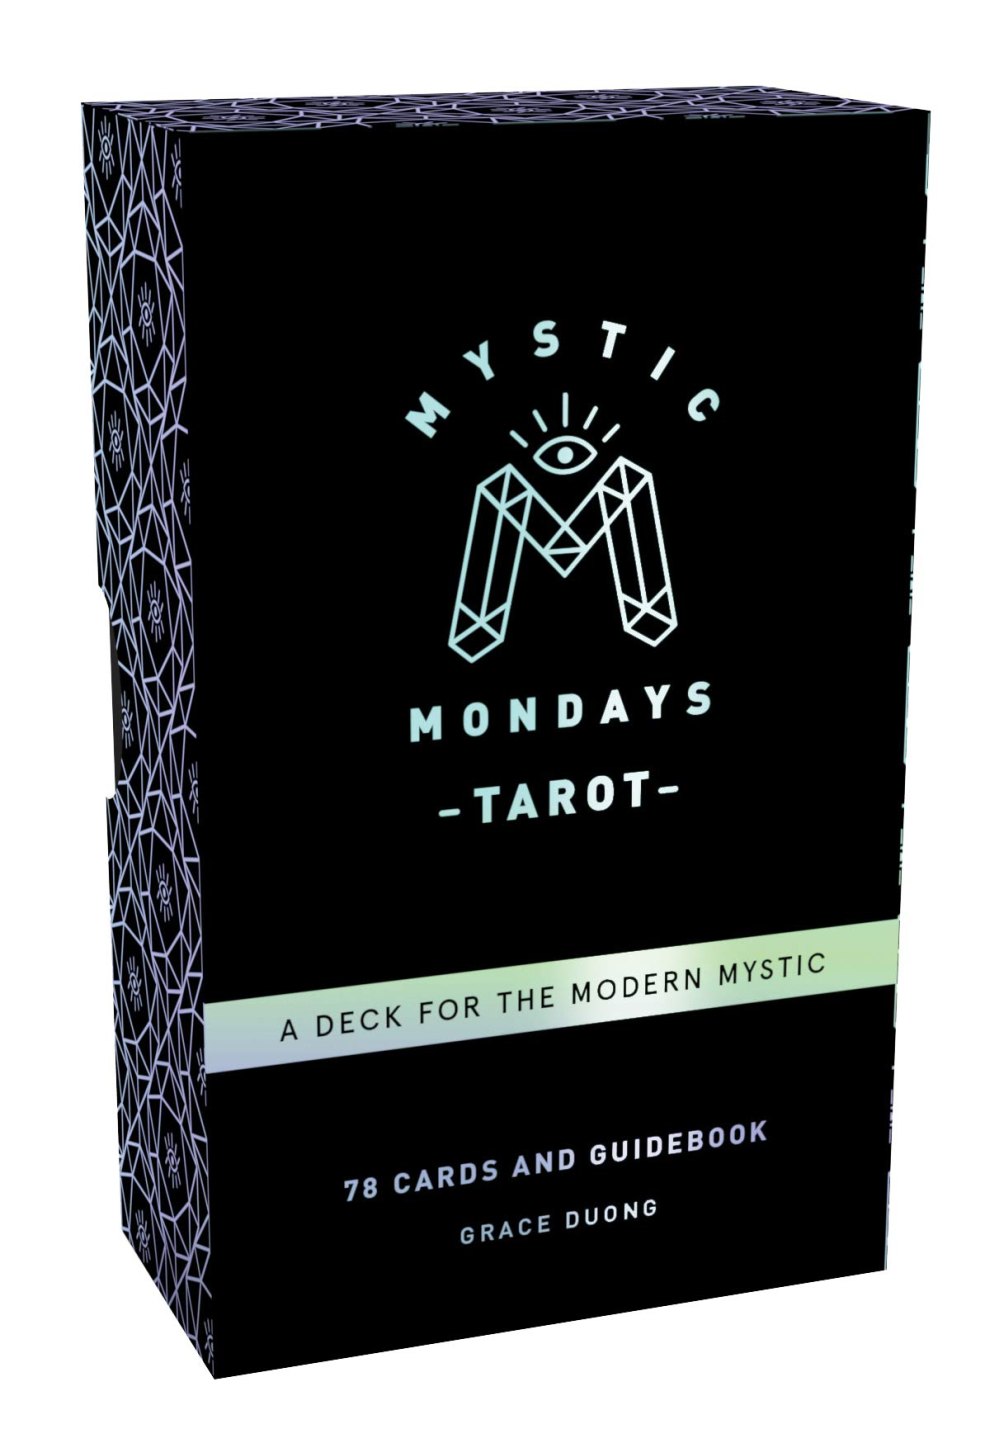 Mystic Mondays Tarot- A Deck for the Modern Mystic